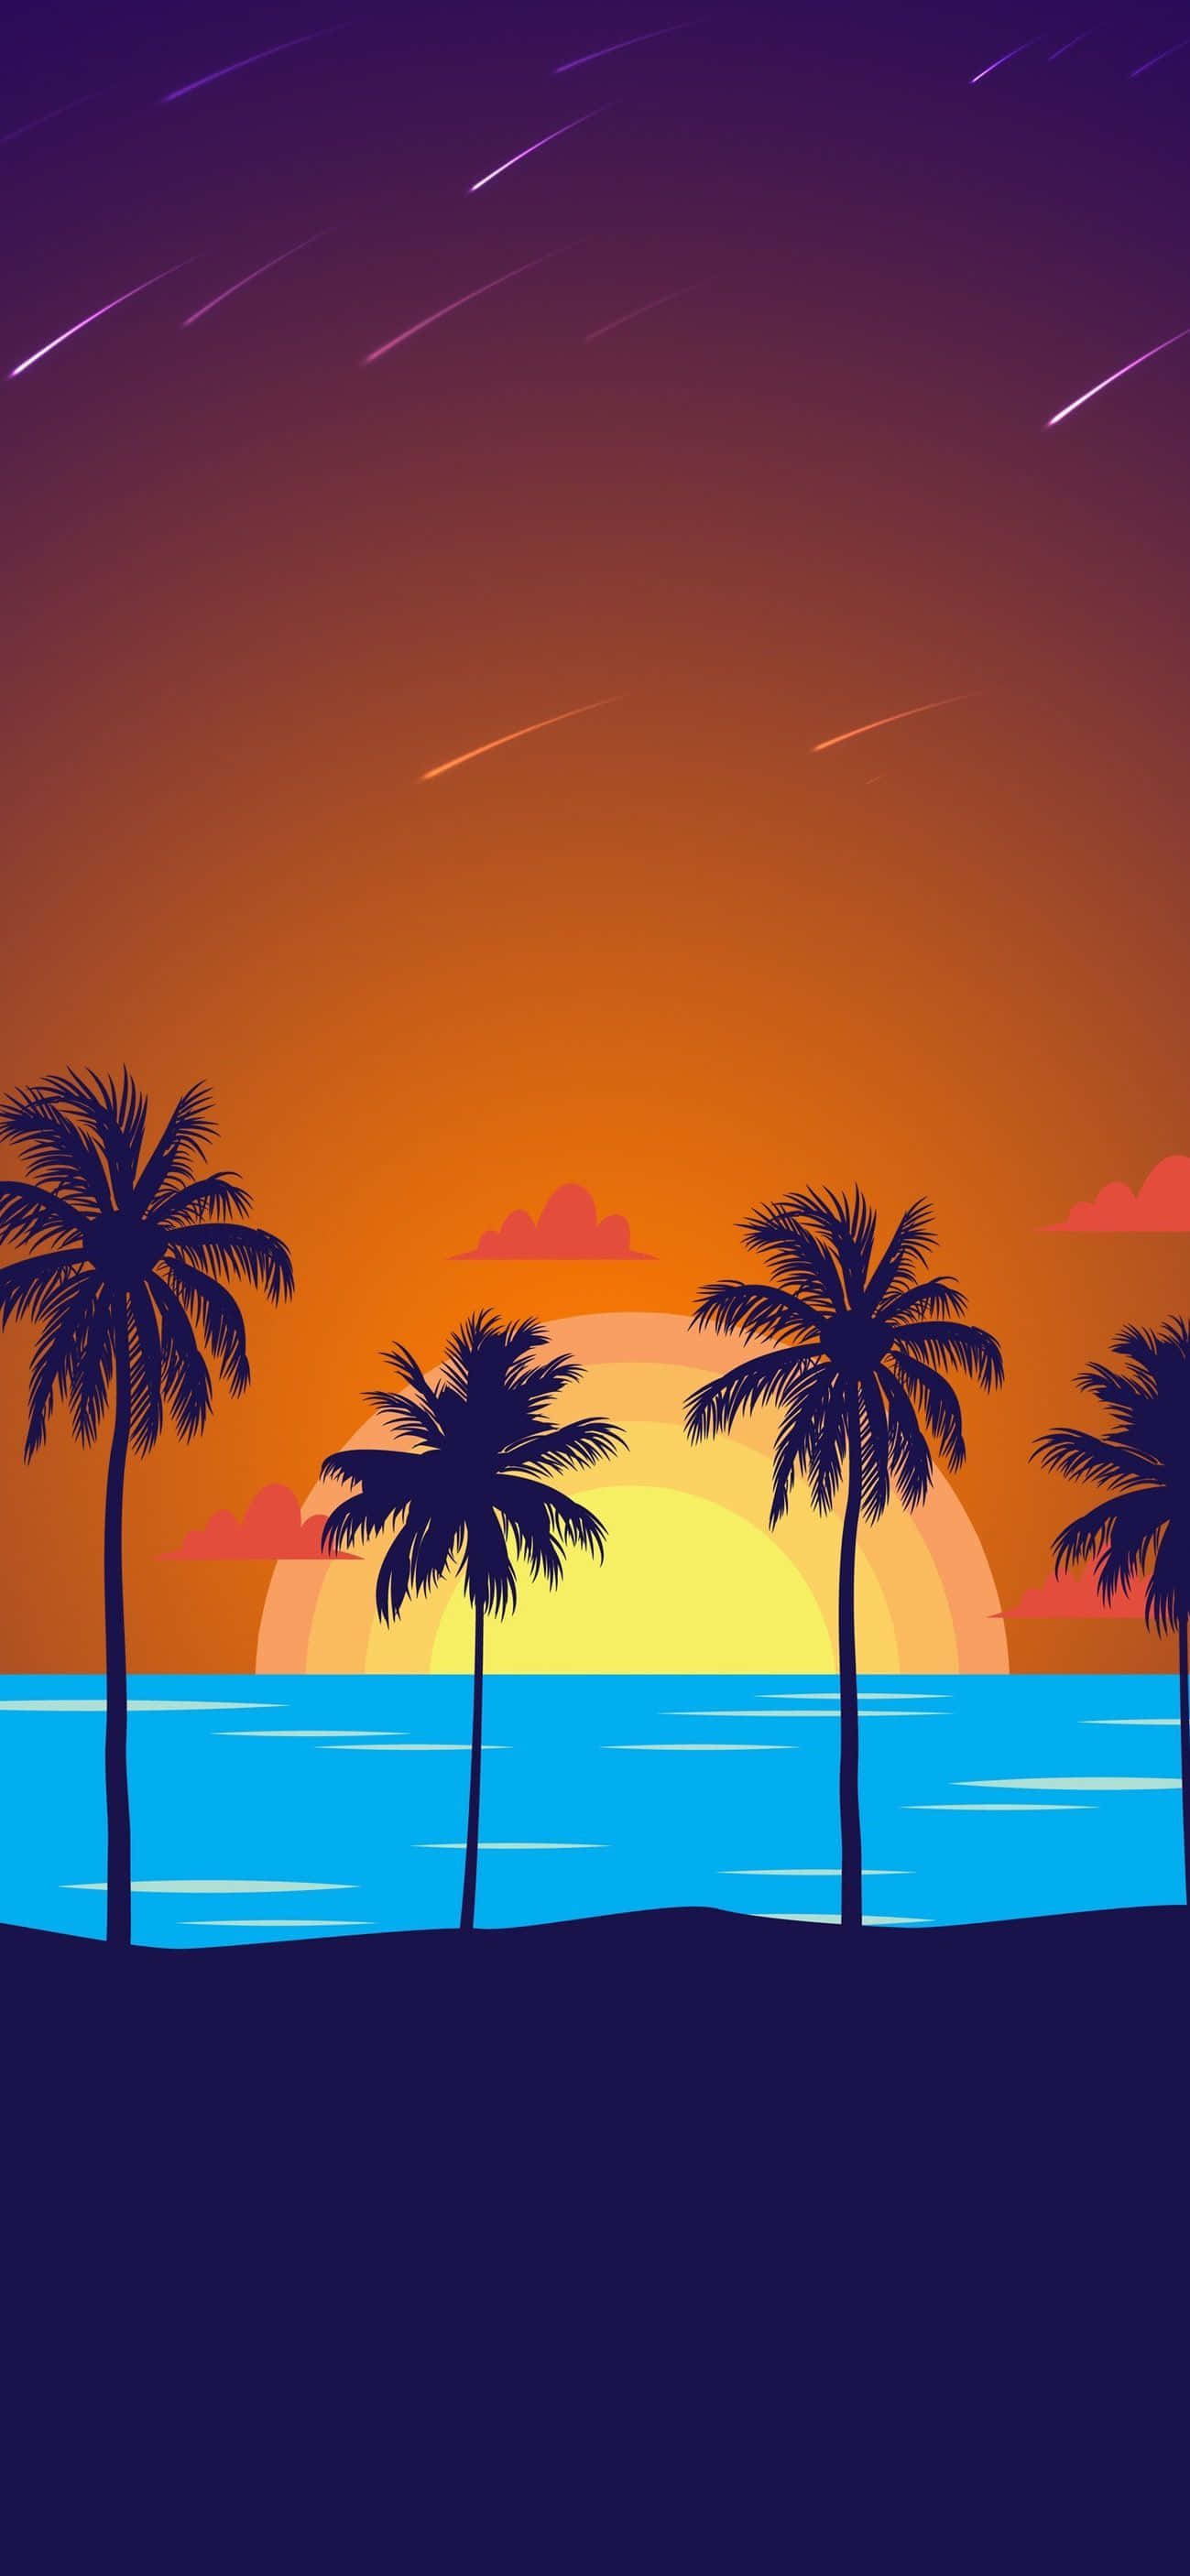 Ensolnedgang Med Palmetræer Og Havet